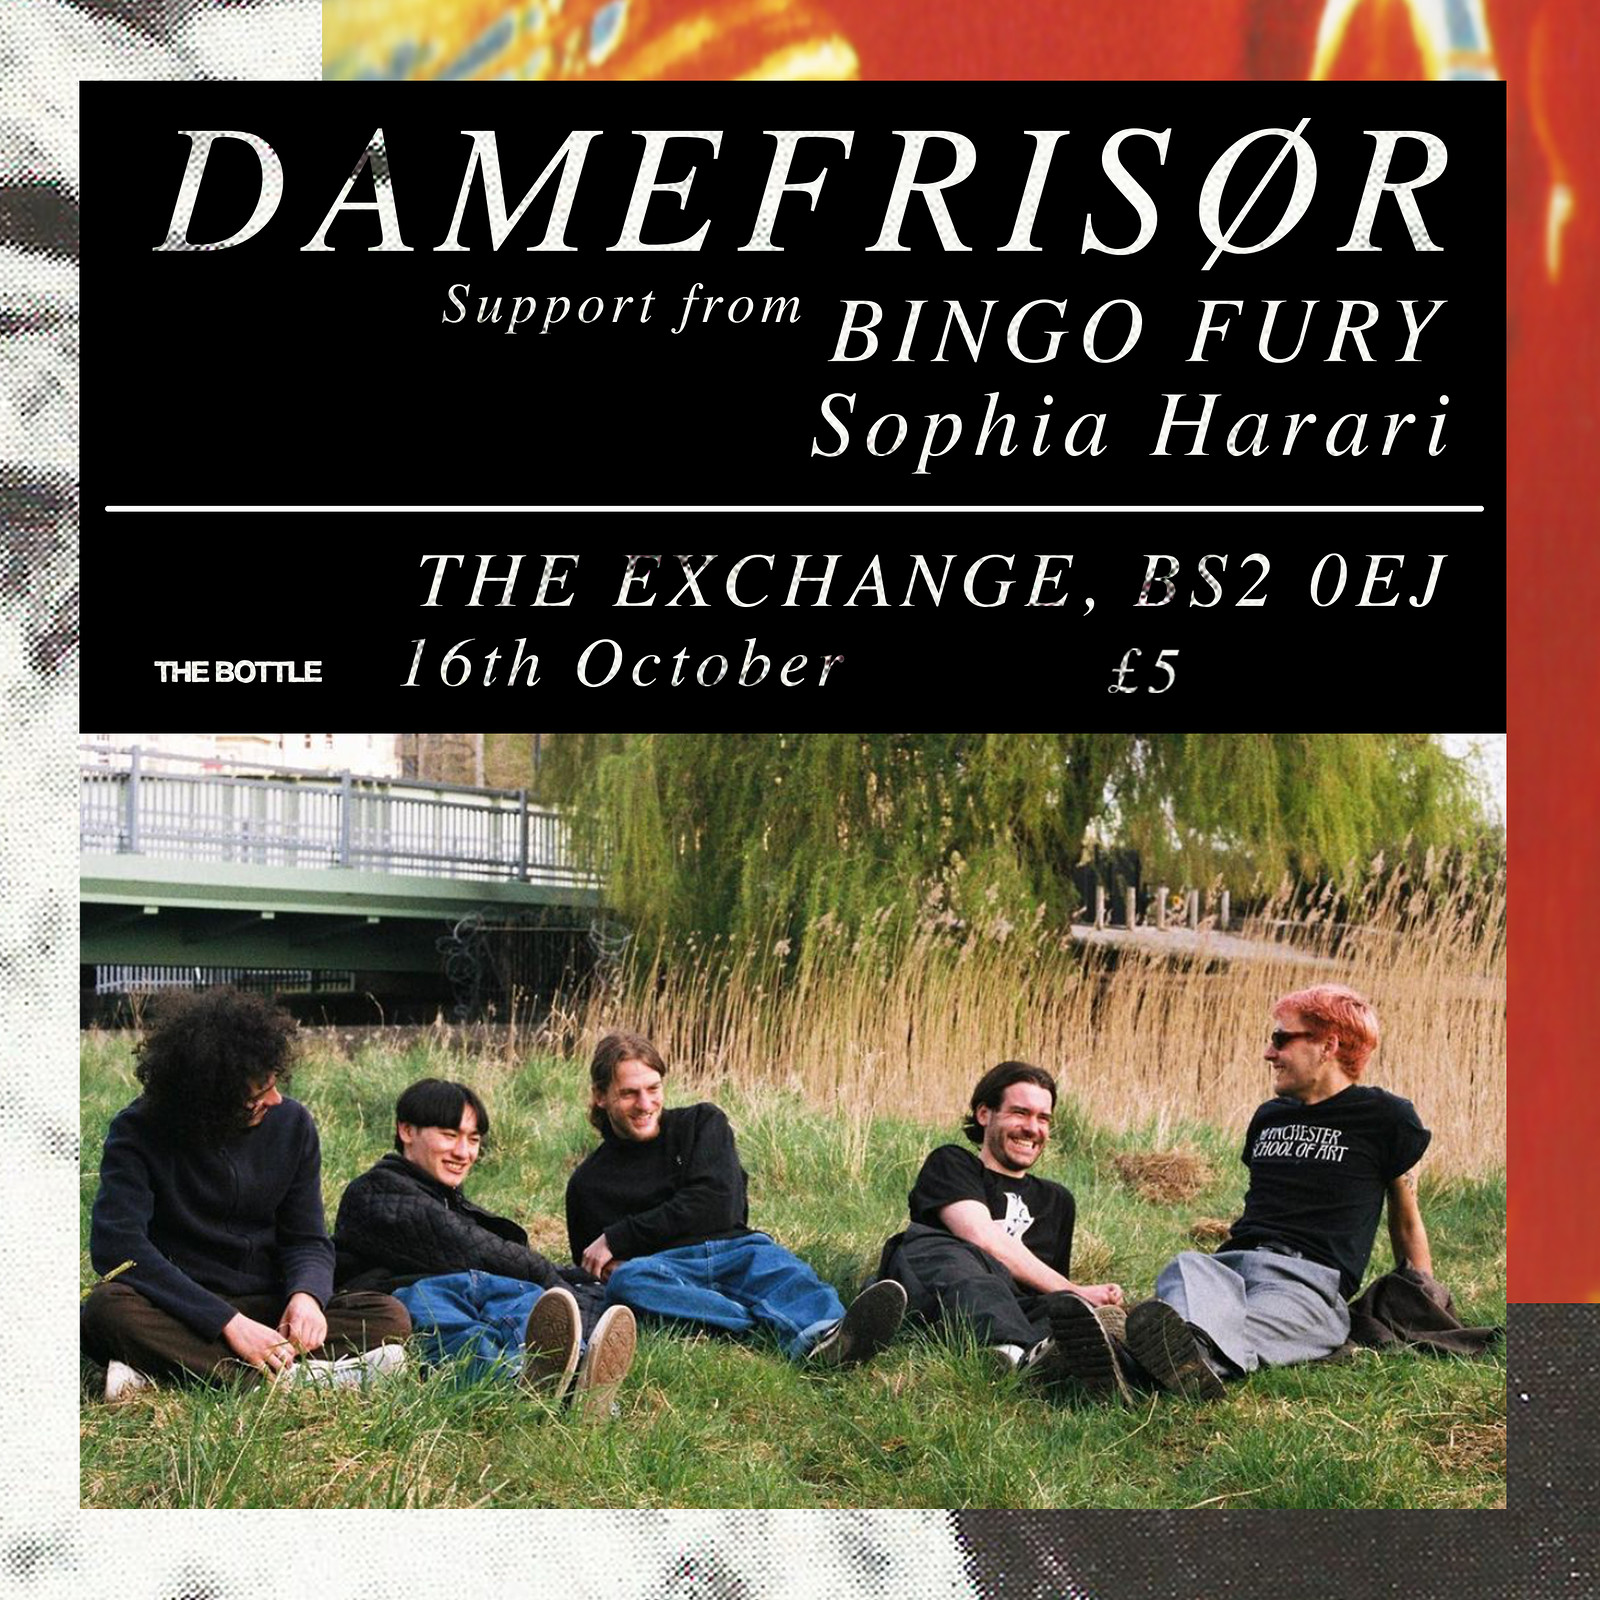 DAMEFRISØR Single Release Party at Exchange